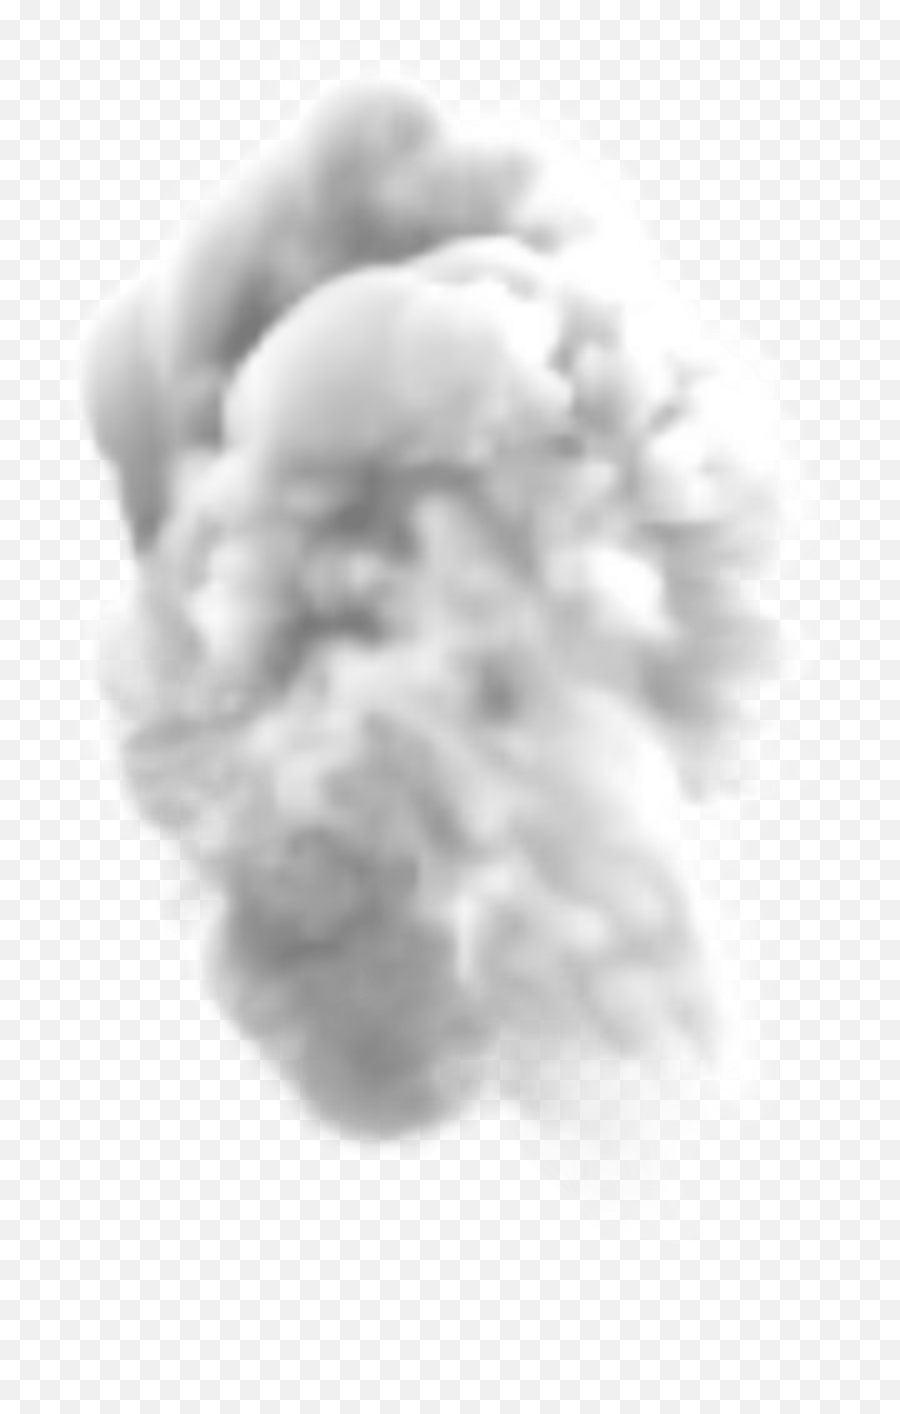 Png Images Download Free Transparent Png On Pngfolio Emoji,Cloud Of Smoke Emoji